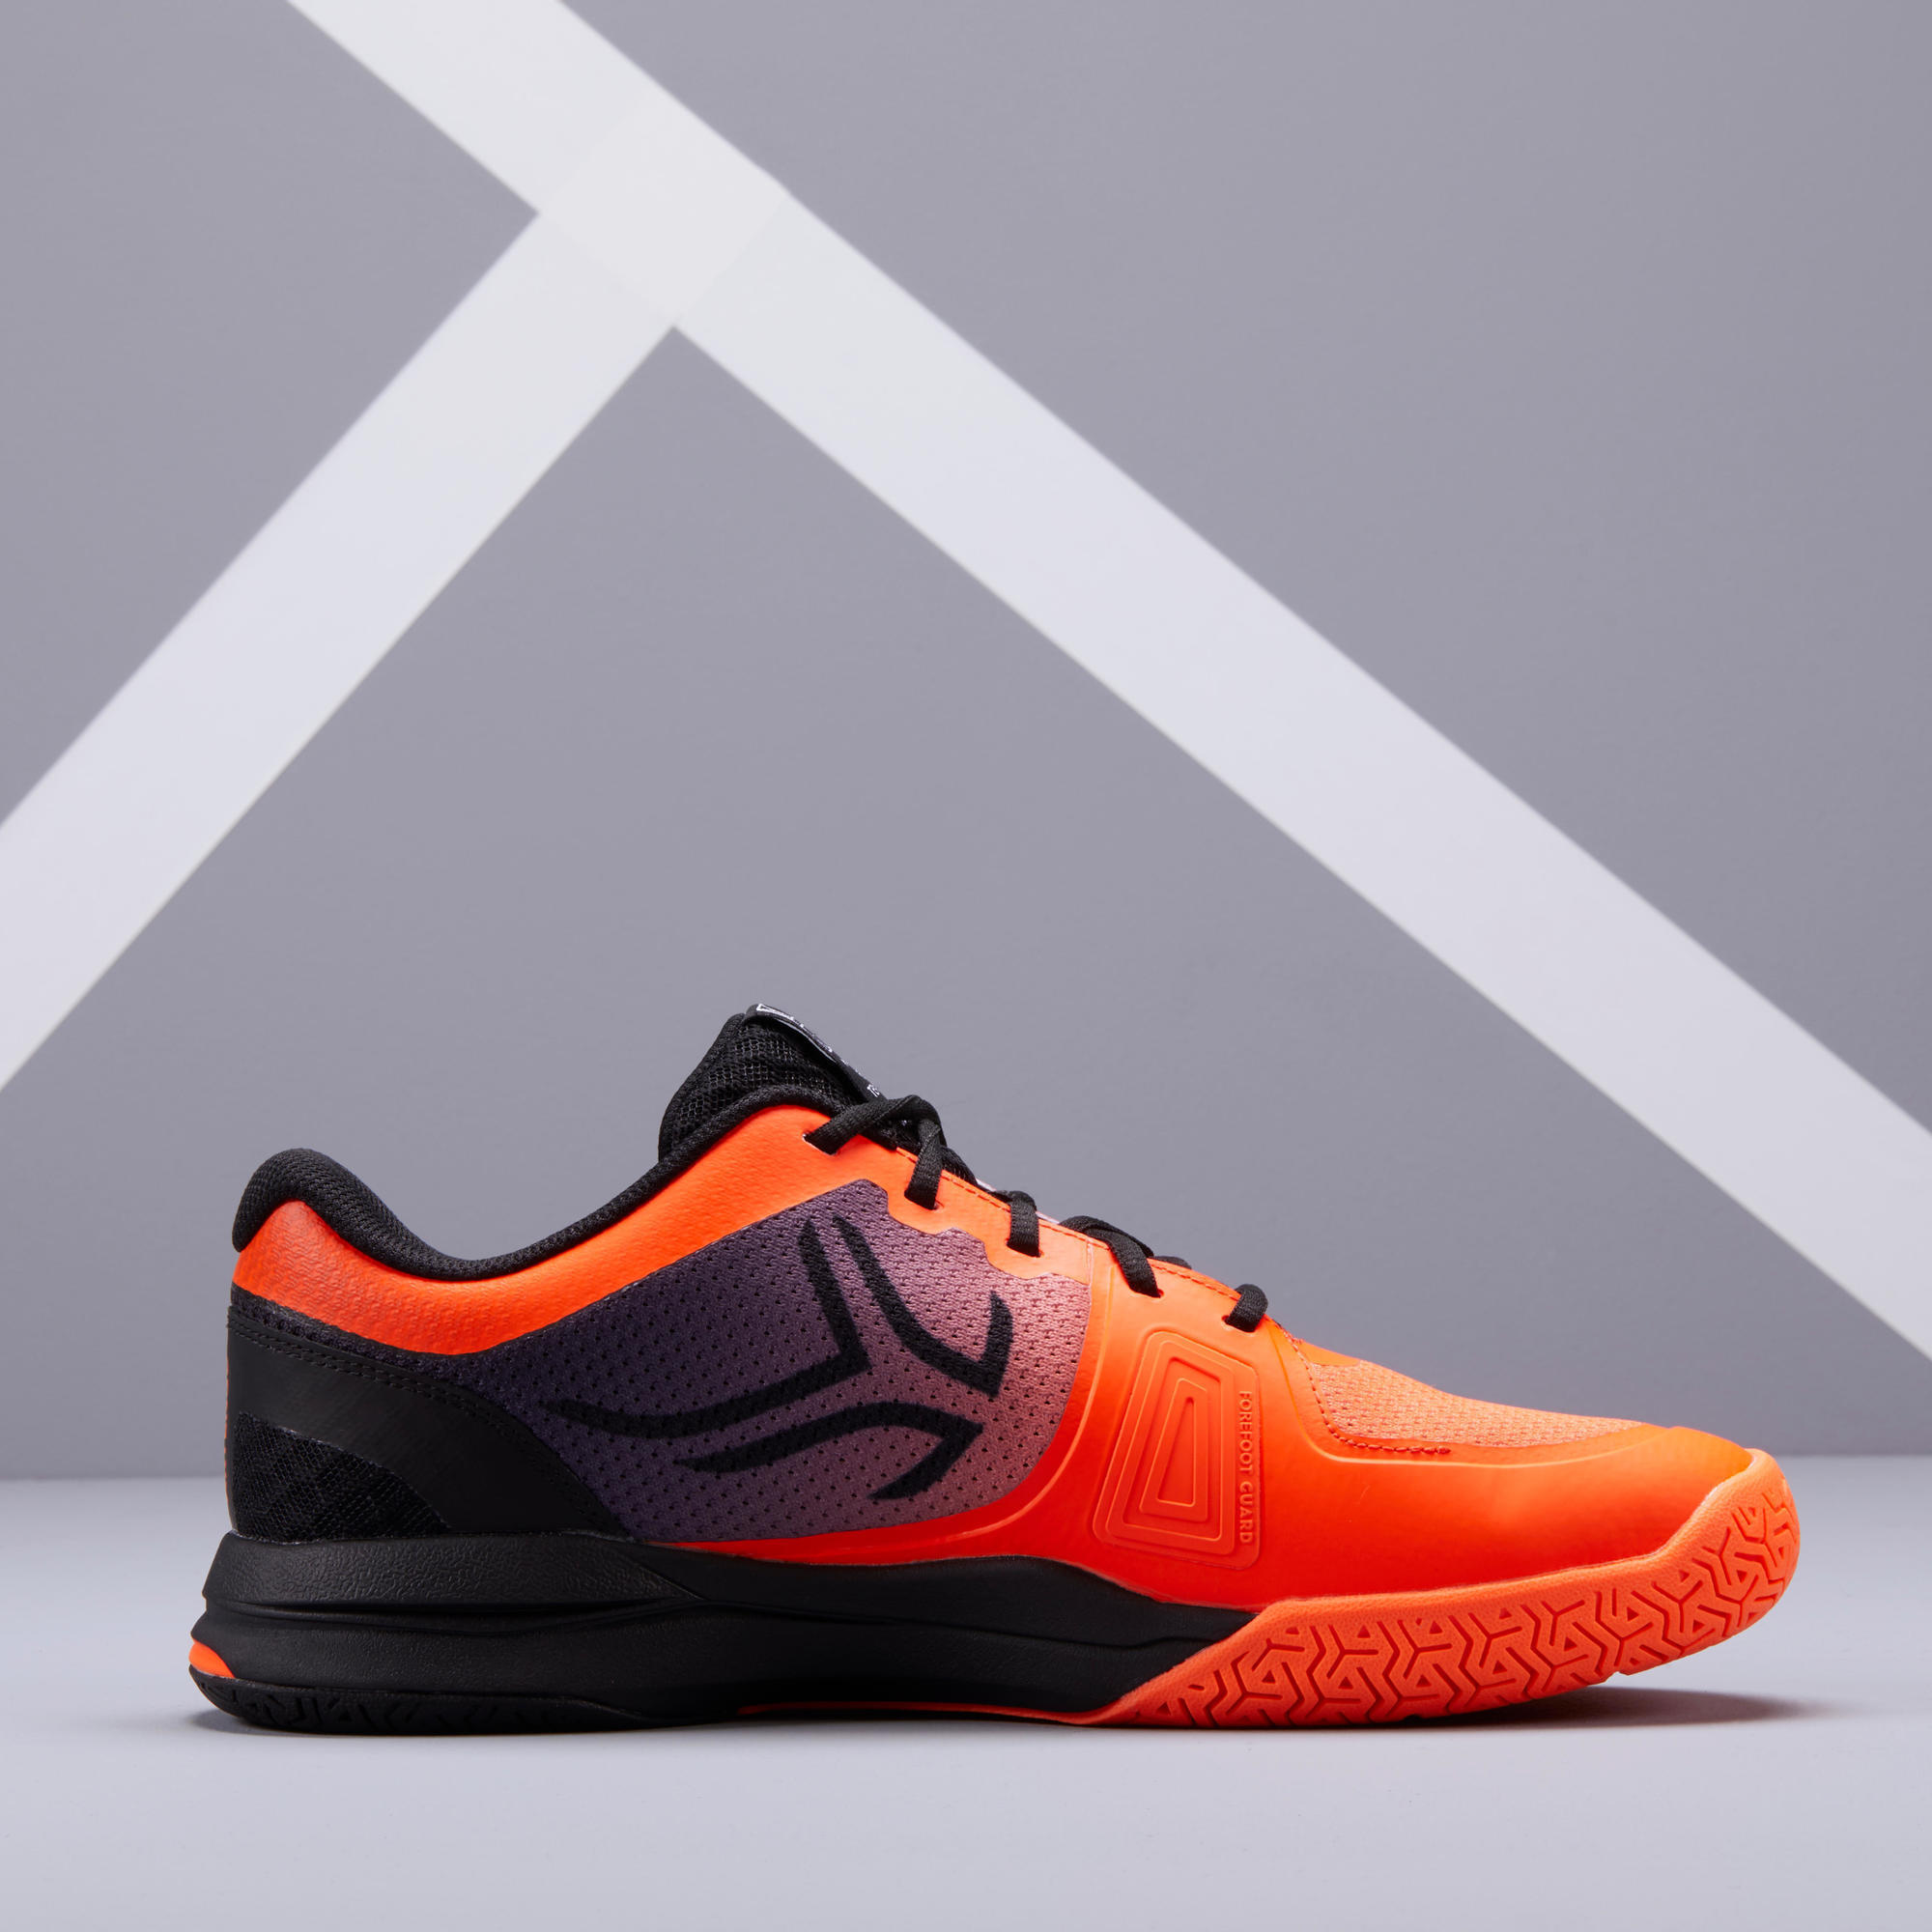 orange and black tennis shoes